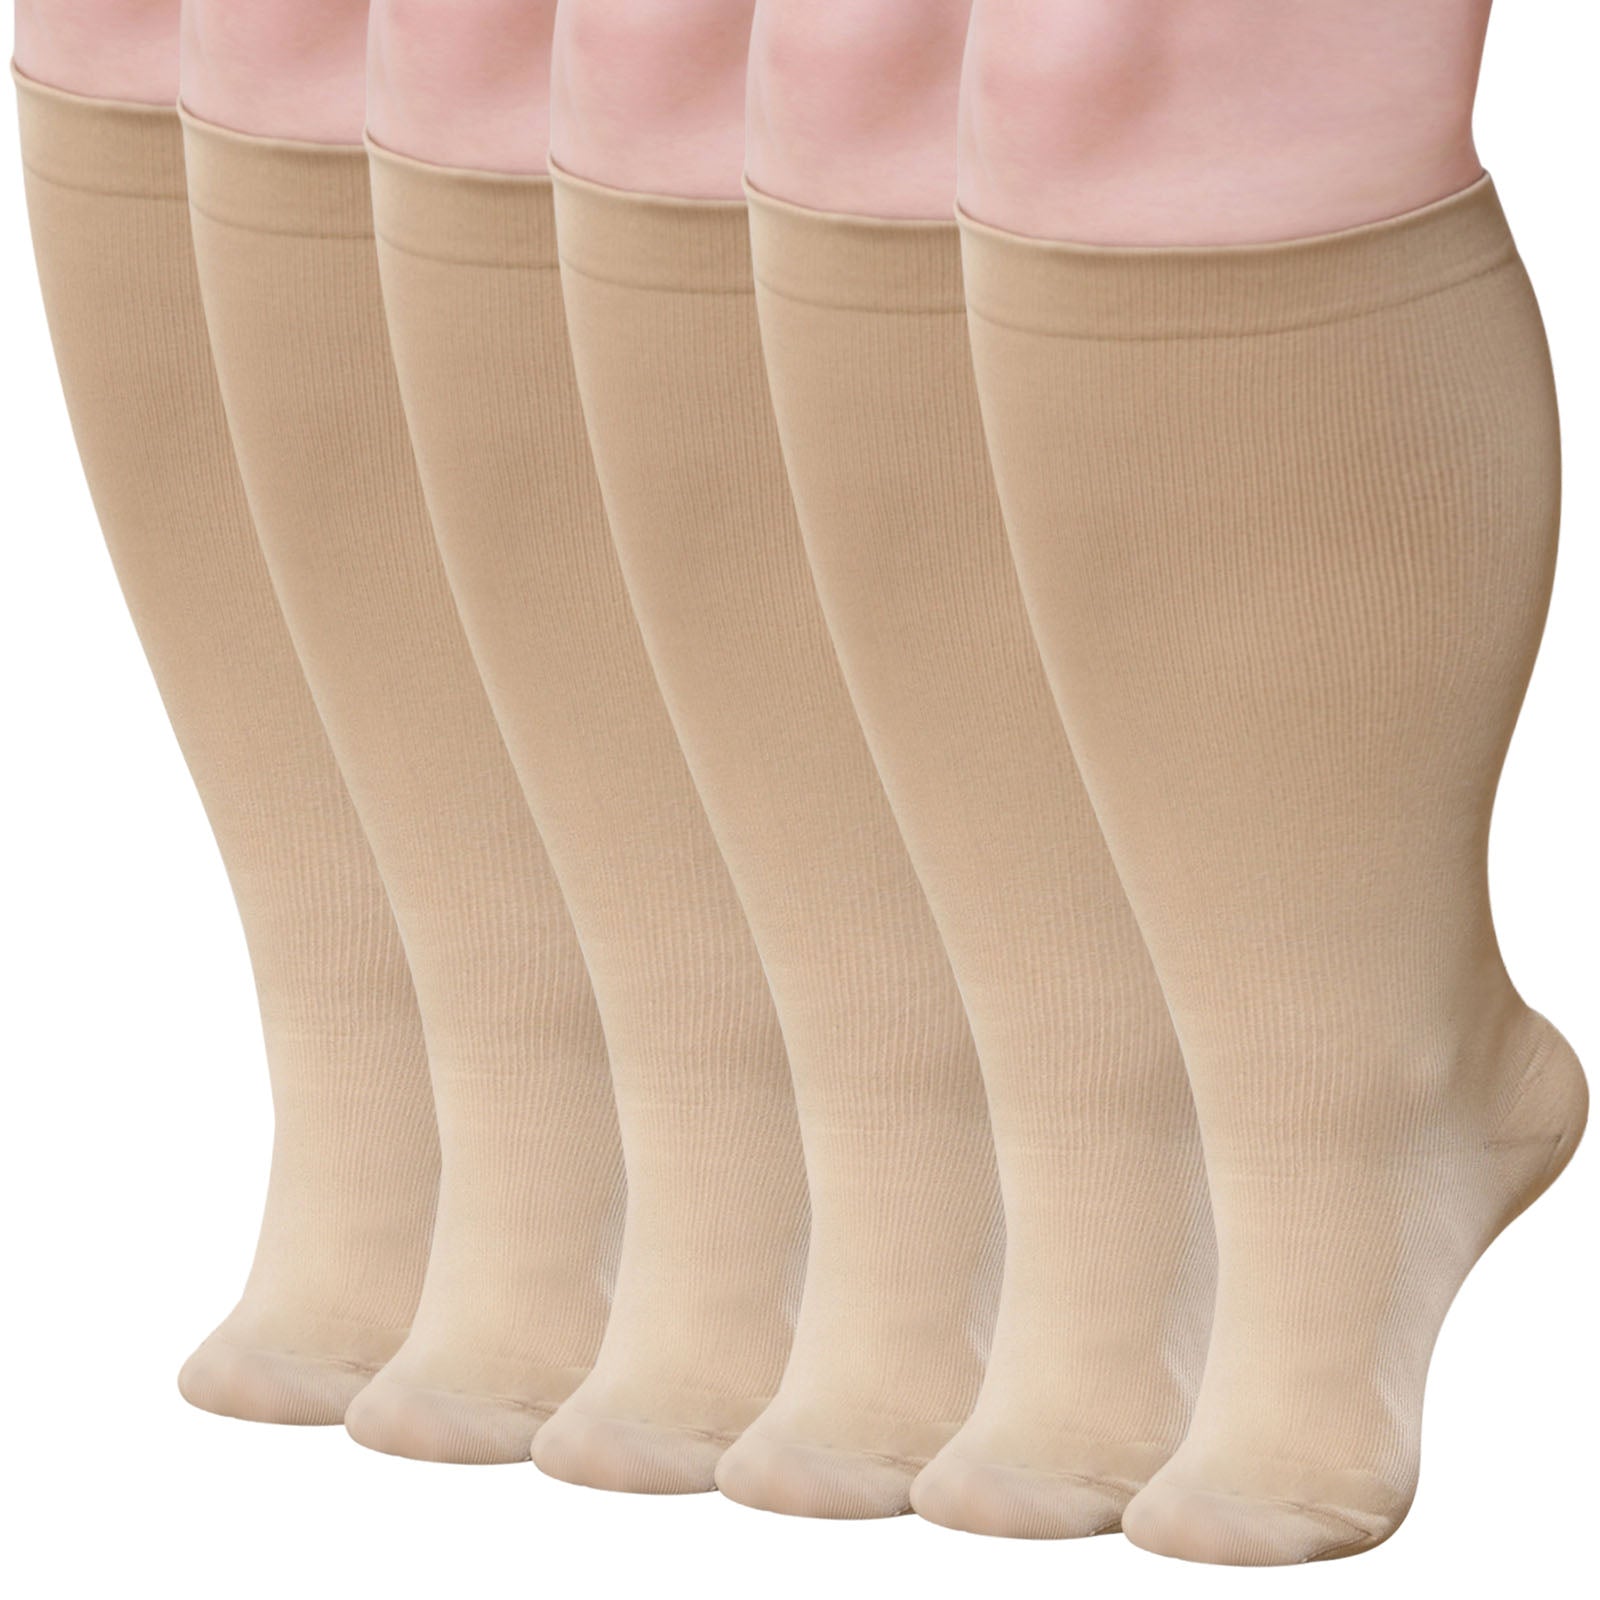 Compression Socks for Women, Artfasion 2 Pairs Medical Compression Soc